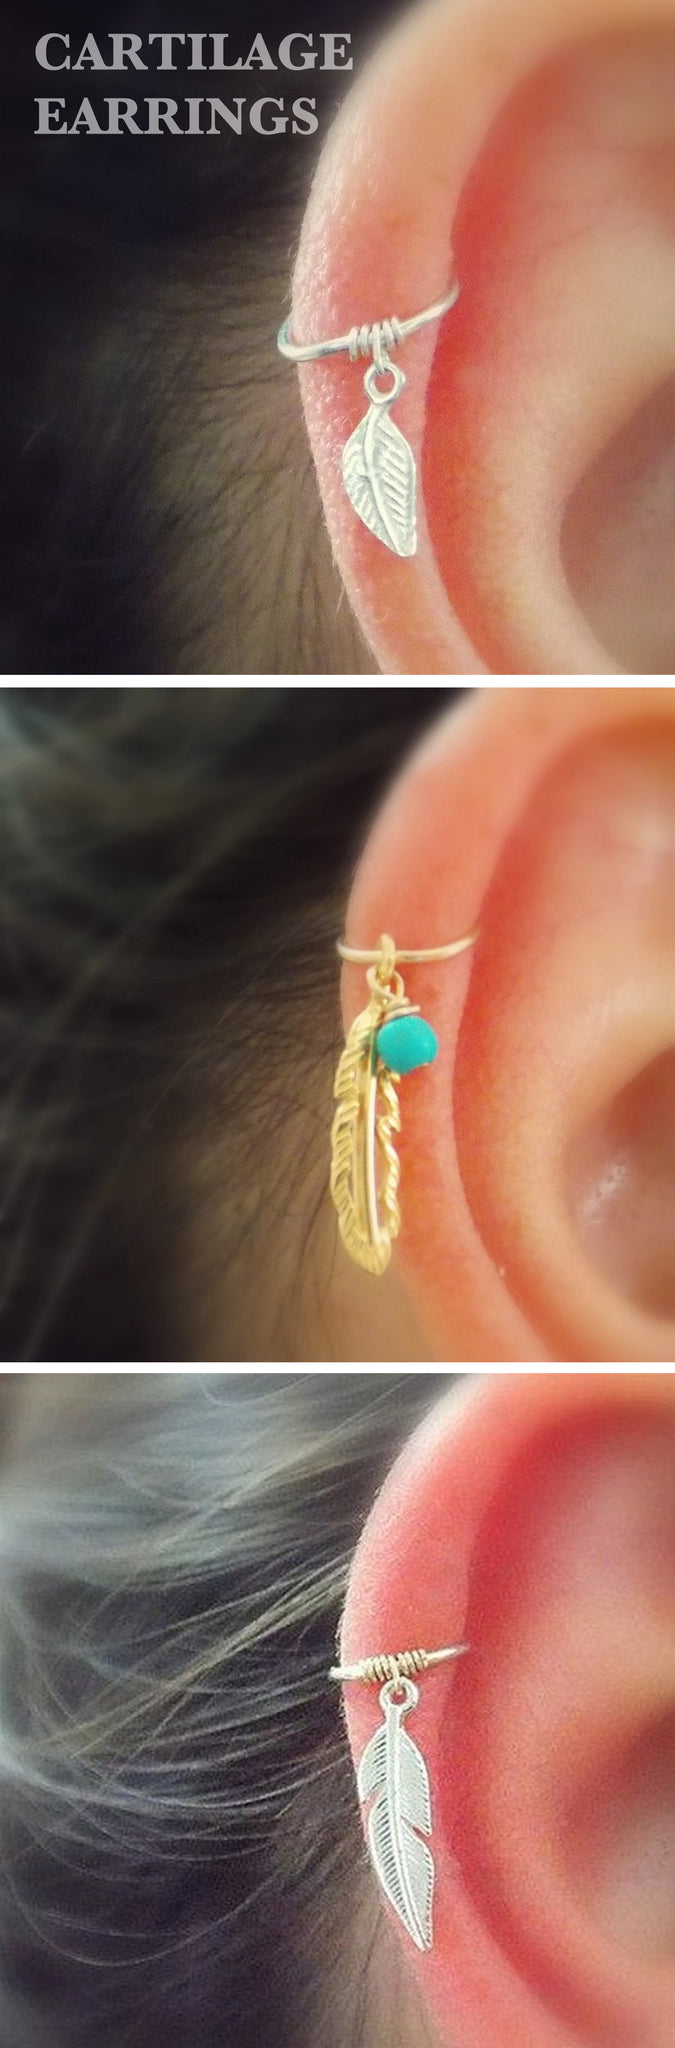 Boho Ear Piercing Ideas Cartilage - Leaf Feather Gold Ring Hoop Earring - www.MyBodiArt.com 